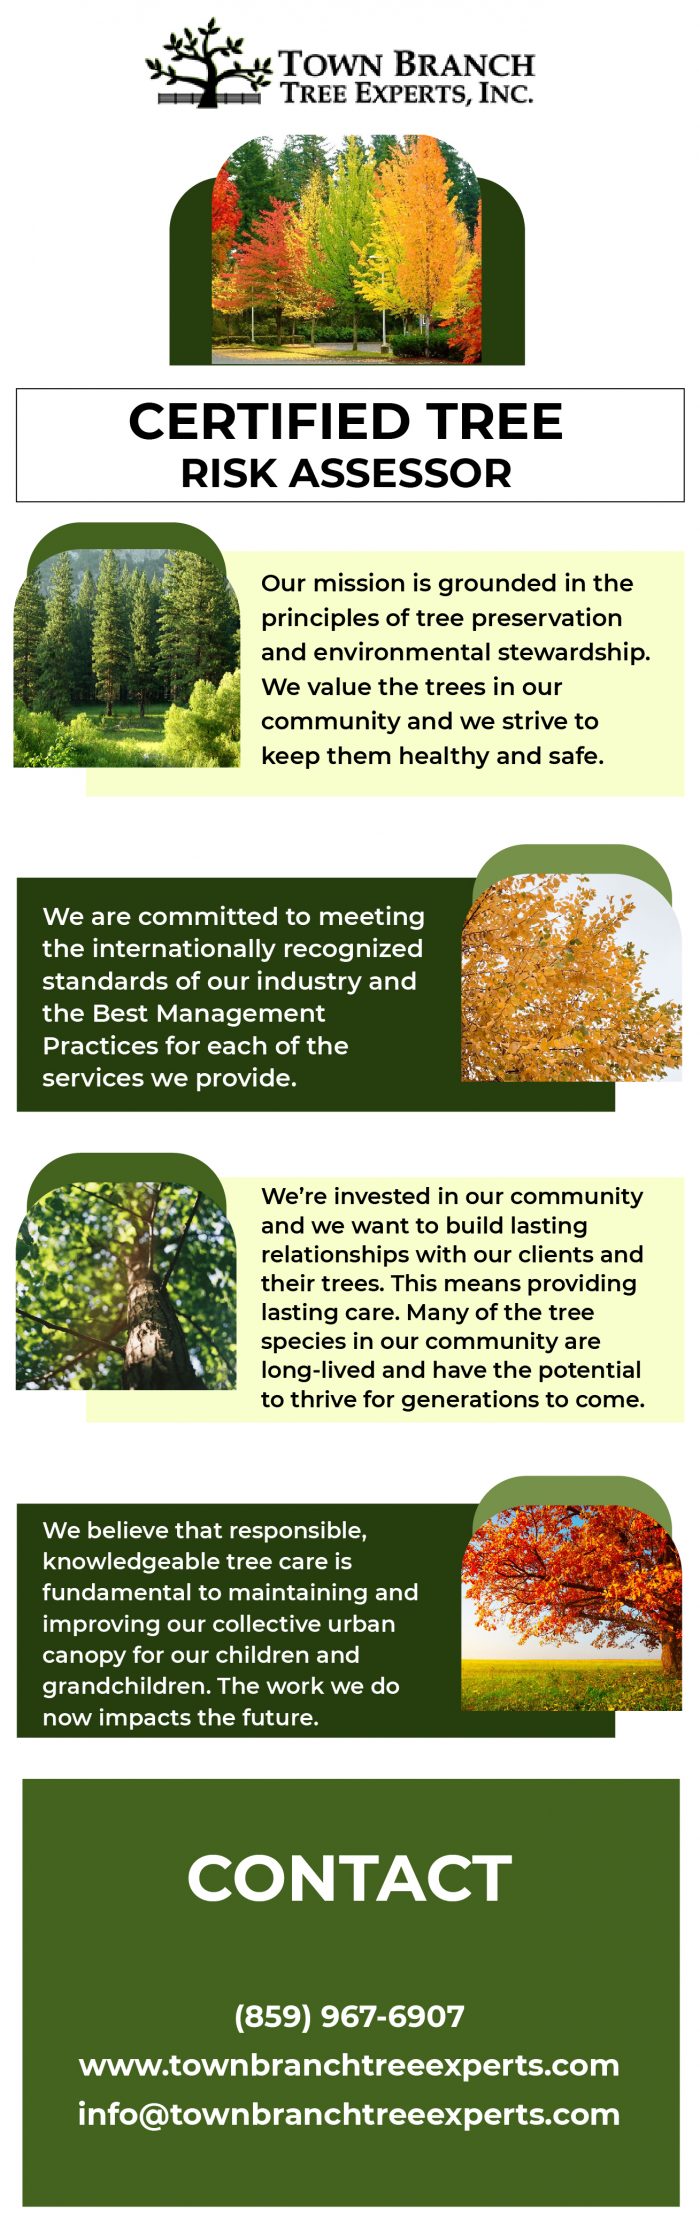 Certified Tree Risk Assessor Service in Lexington | Town Branch Tree Expert